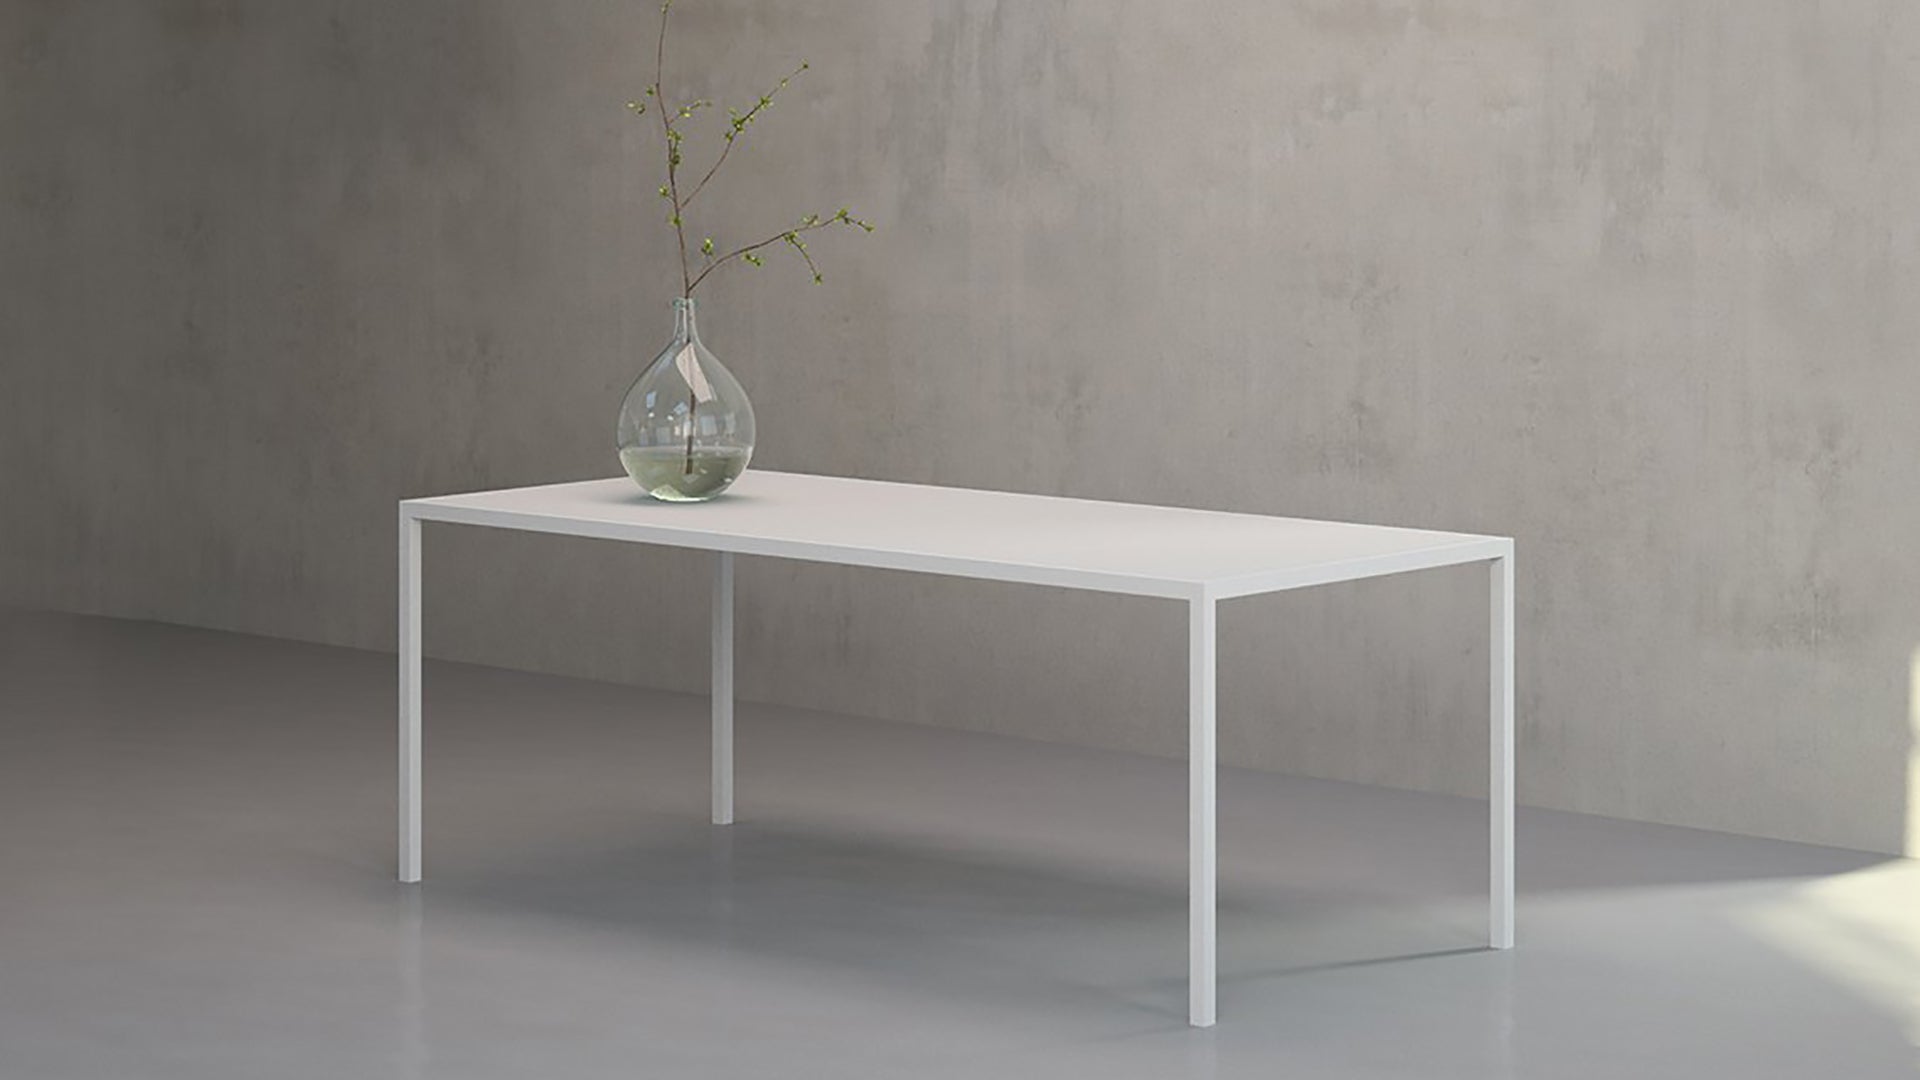 Minimalistische design eettafels |Moderne Design eettafels|Minimalistische Esstische | Minimalist design dining tables | Mesas de comedor minimalista